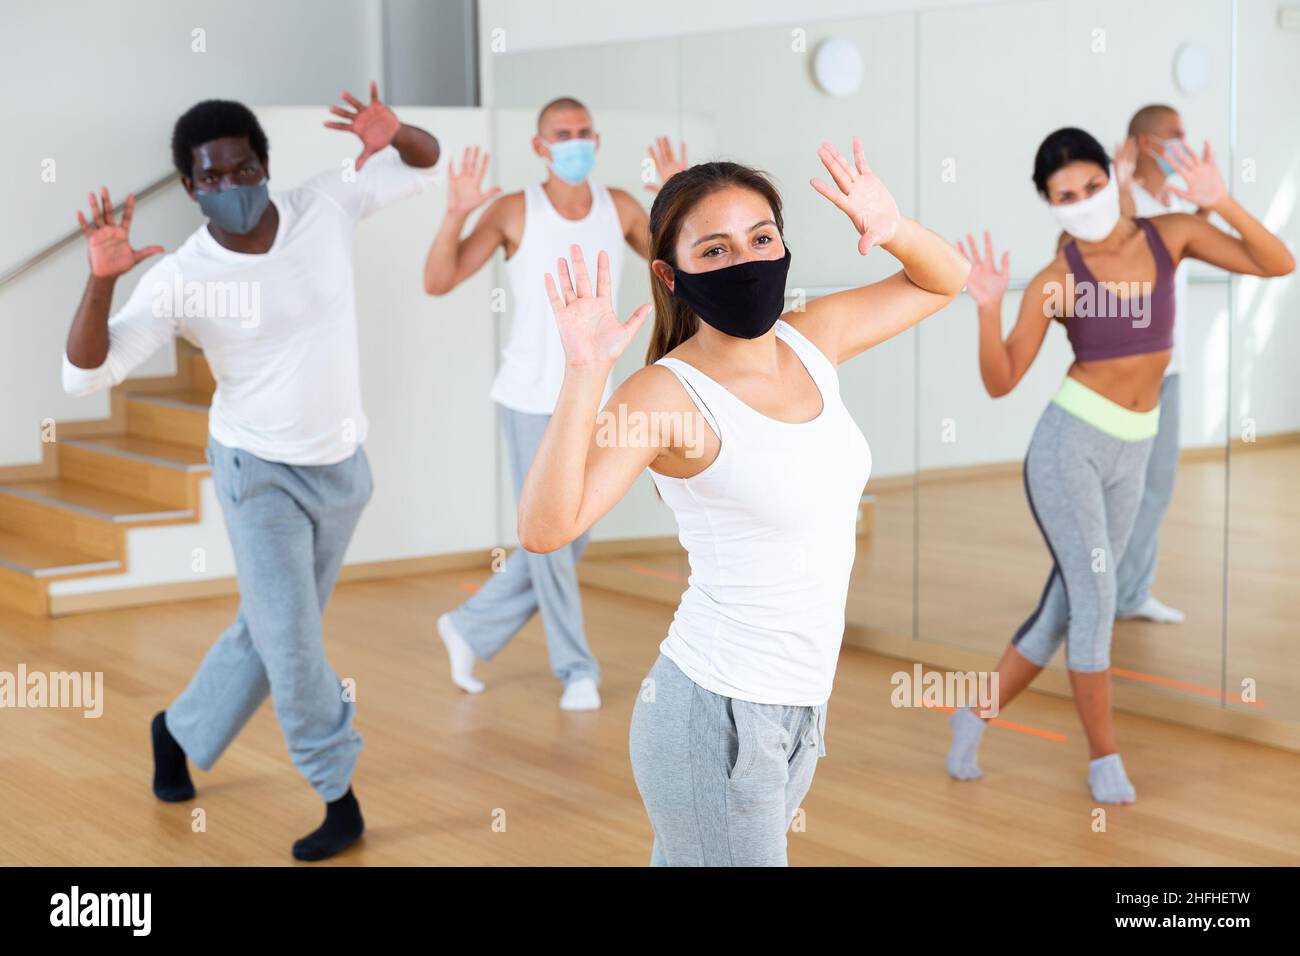 People in masks training in dance studio Stock Photo